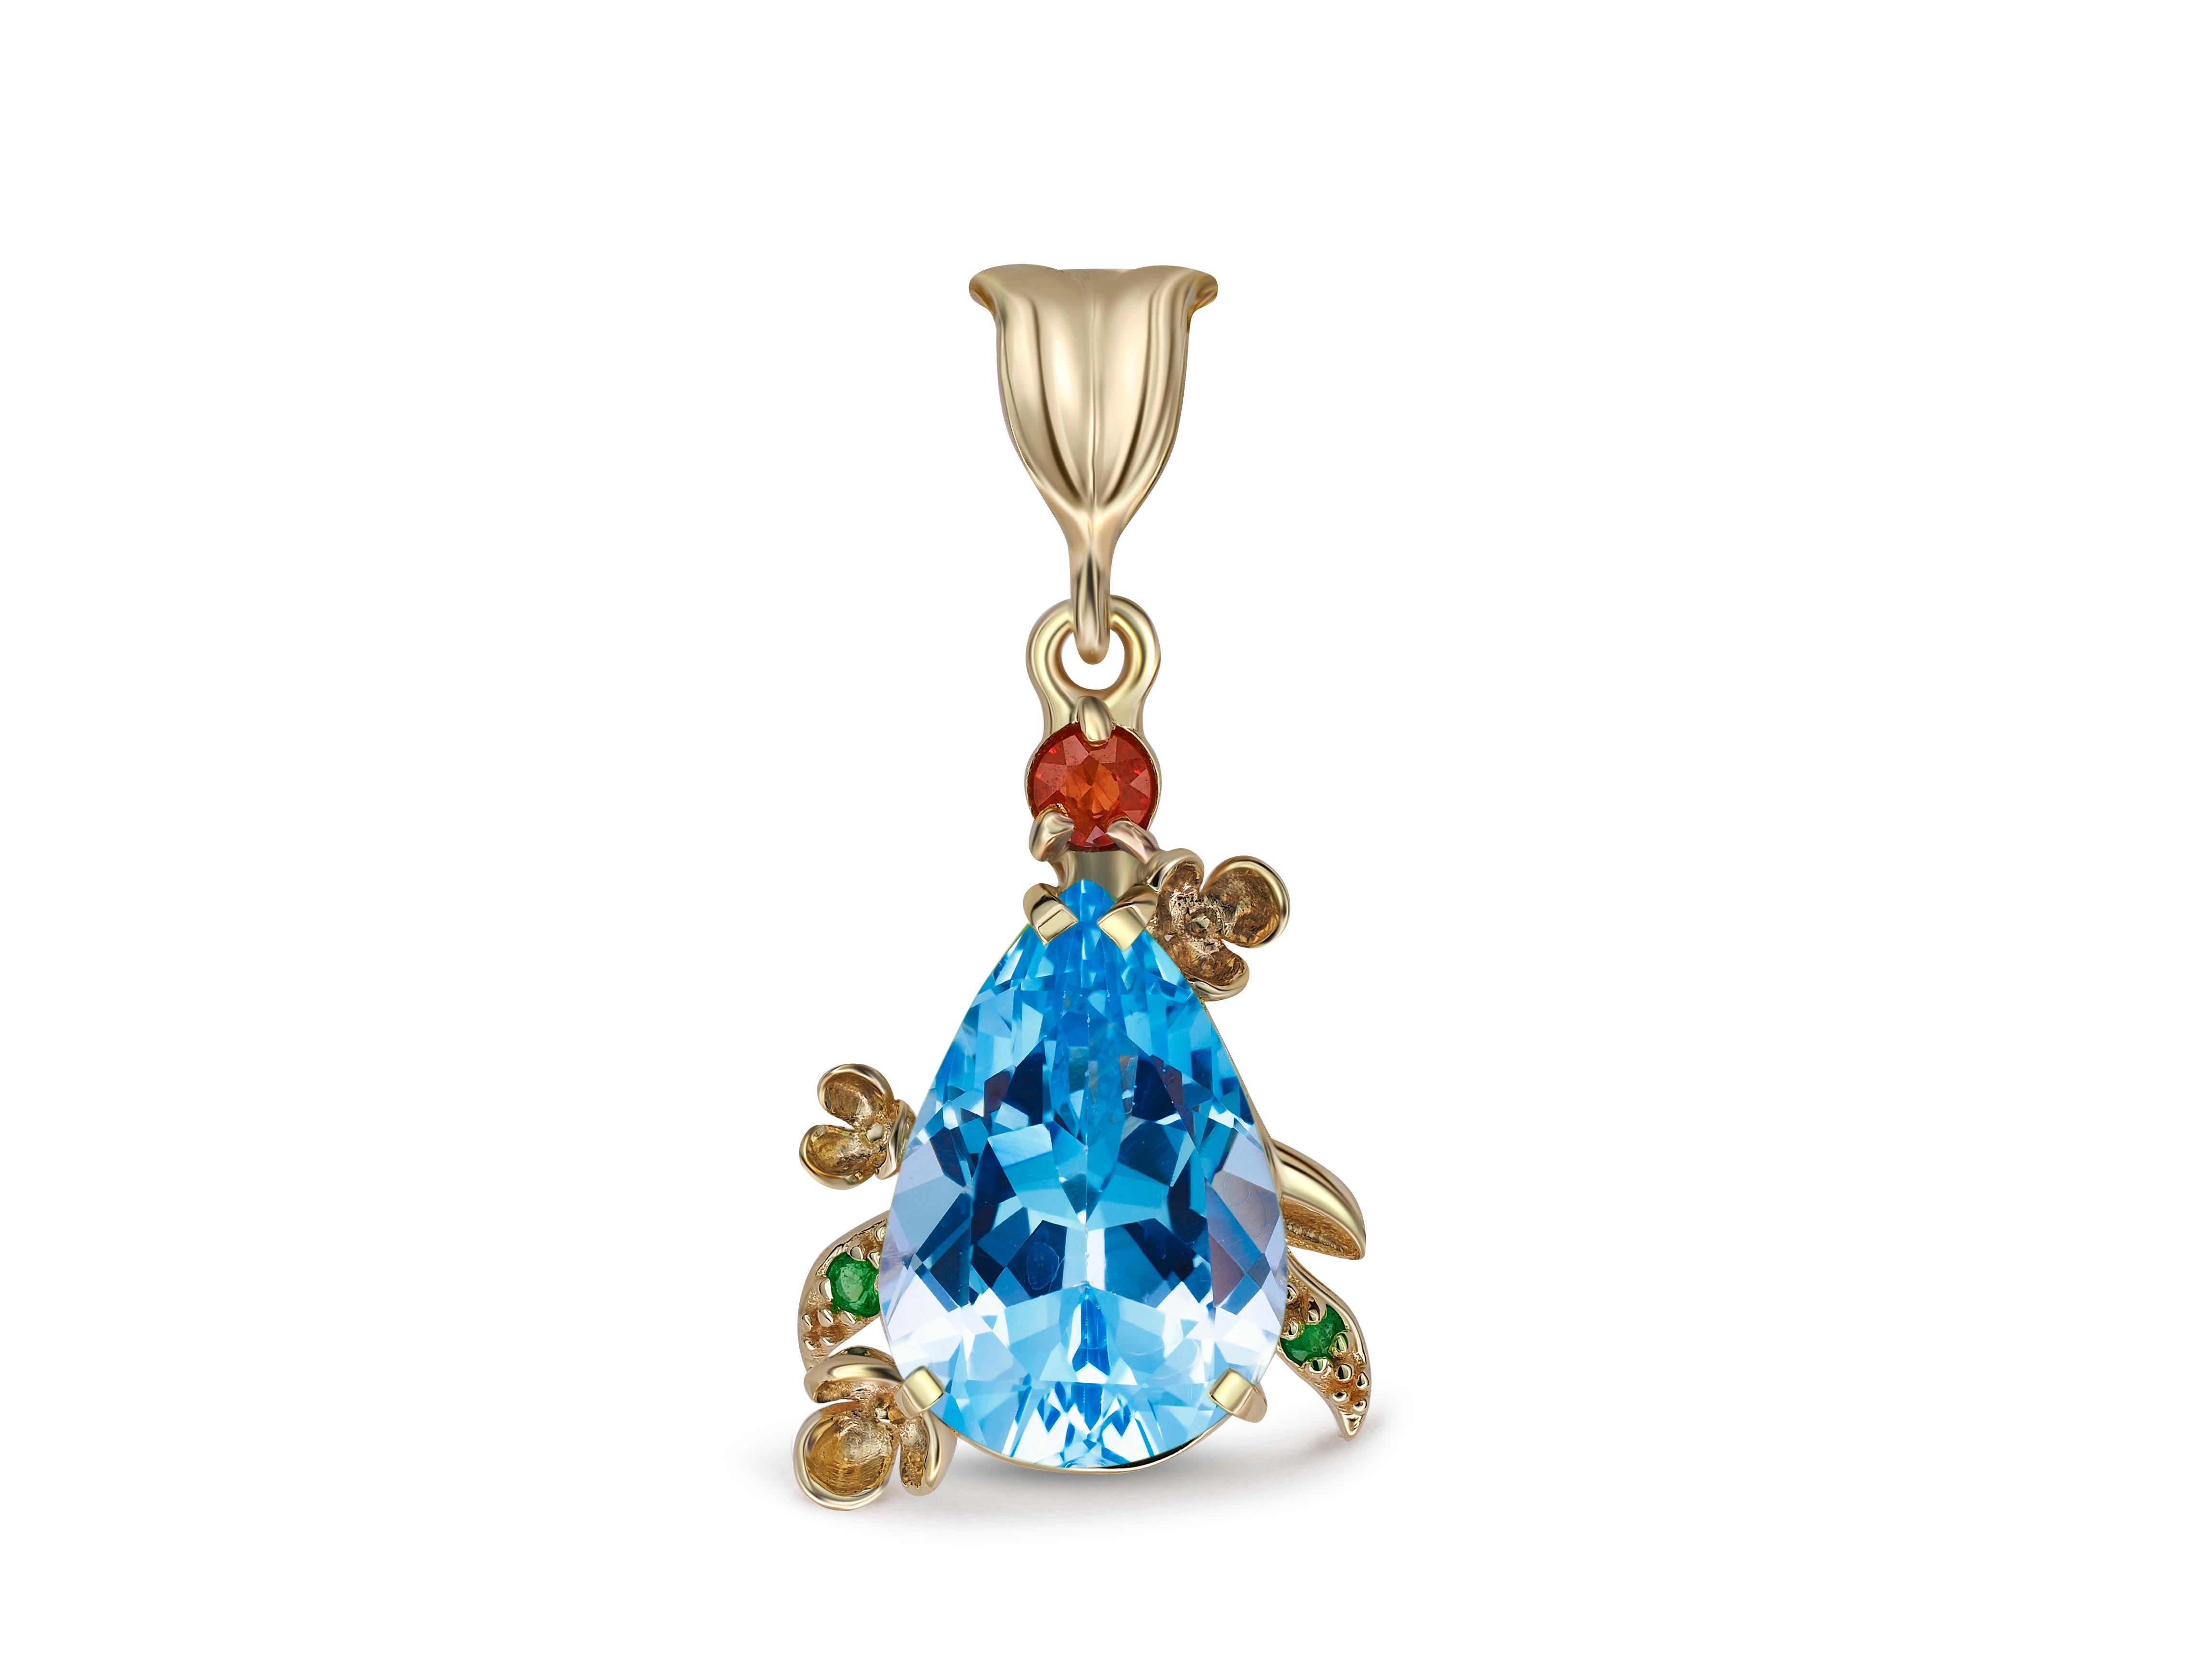 Blue topaz pendant in 14 karat gold. 
Pear topaz pendant in 14 karat gold. Flower pendant with natural topaz. Genuine topaz pendant.

Metal: 14k gold
Weight: 2.85 g.
Pendant size: 30x14.5 mm.

Set with topaz: color - sky blue, pear cut, aprox 2.5